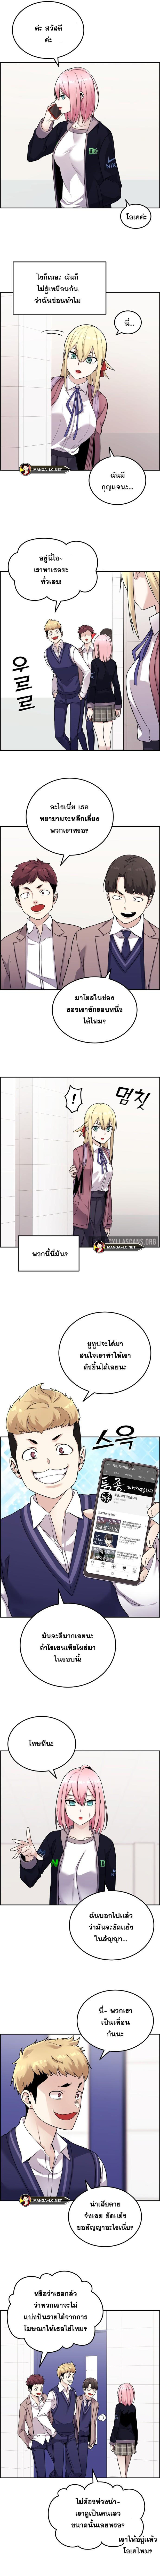 Webtoon Character Na Kang Lim ร ยธโ€ขร ยธยญร ยธโขร ยธโ€”ร ยธยตร ยนห 21 (3)